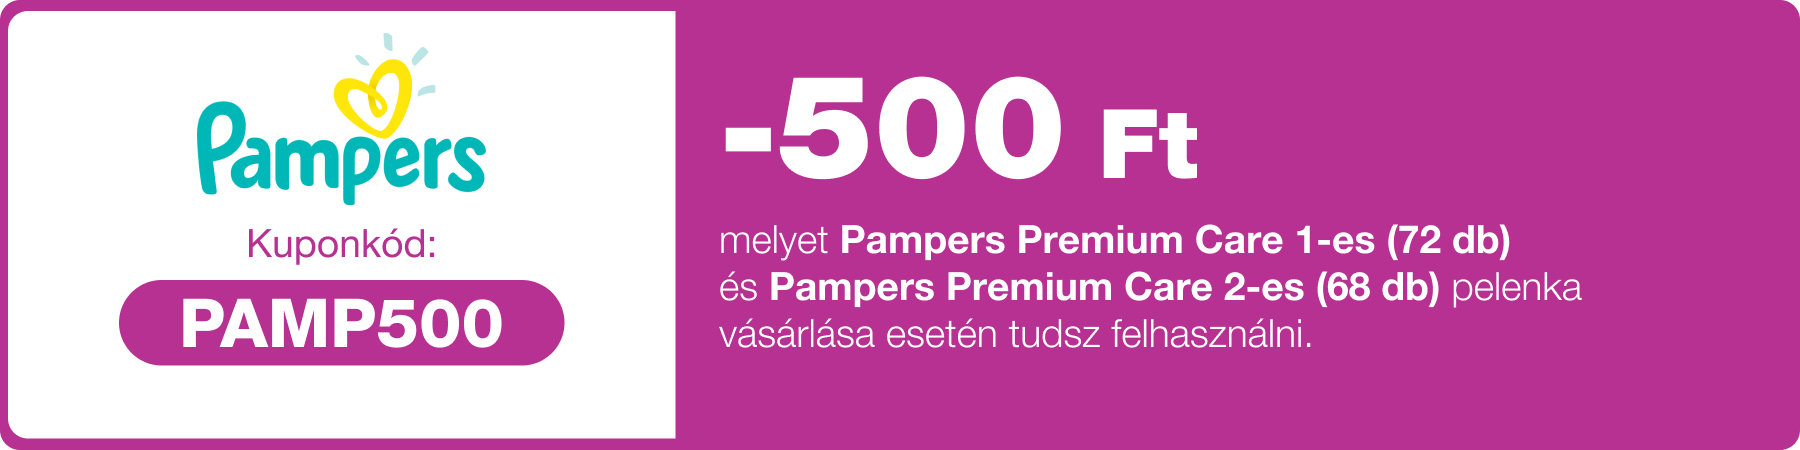 -500 Ft kedvezmény Pamper Premium Care 1-es (72 db) és 2-es (68 db) pelenkákra.